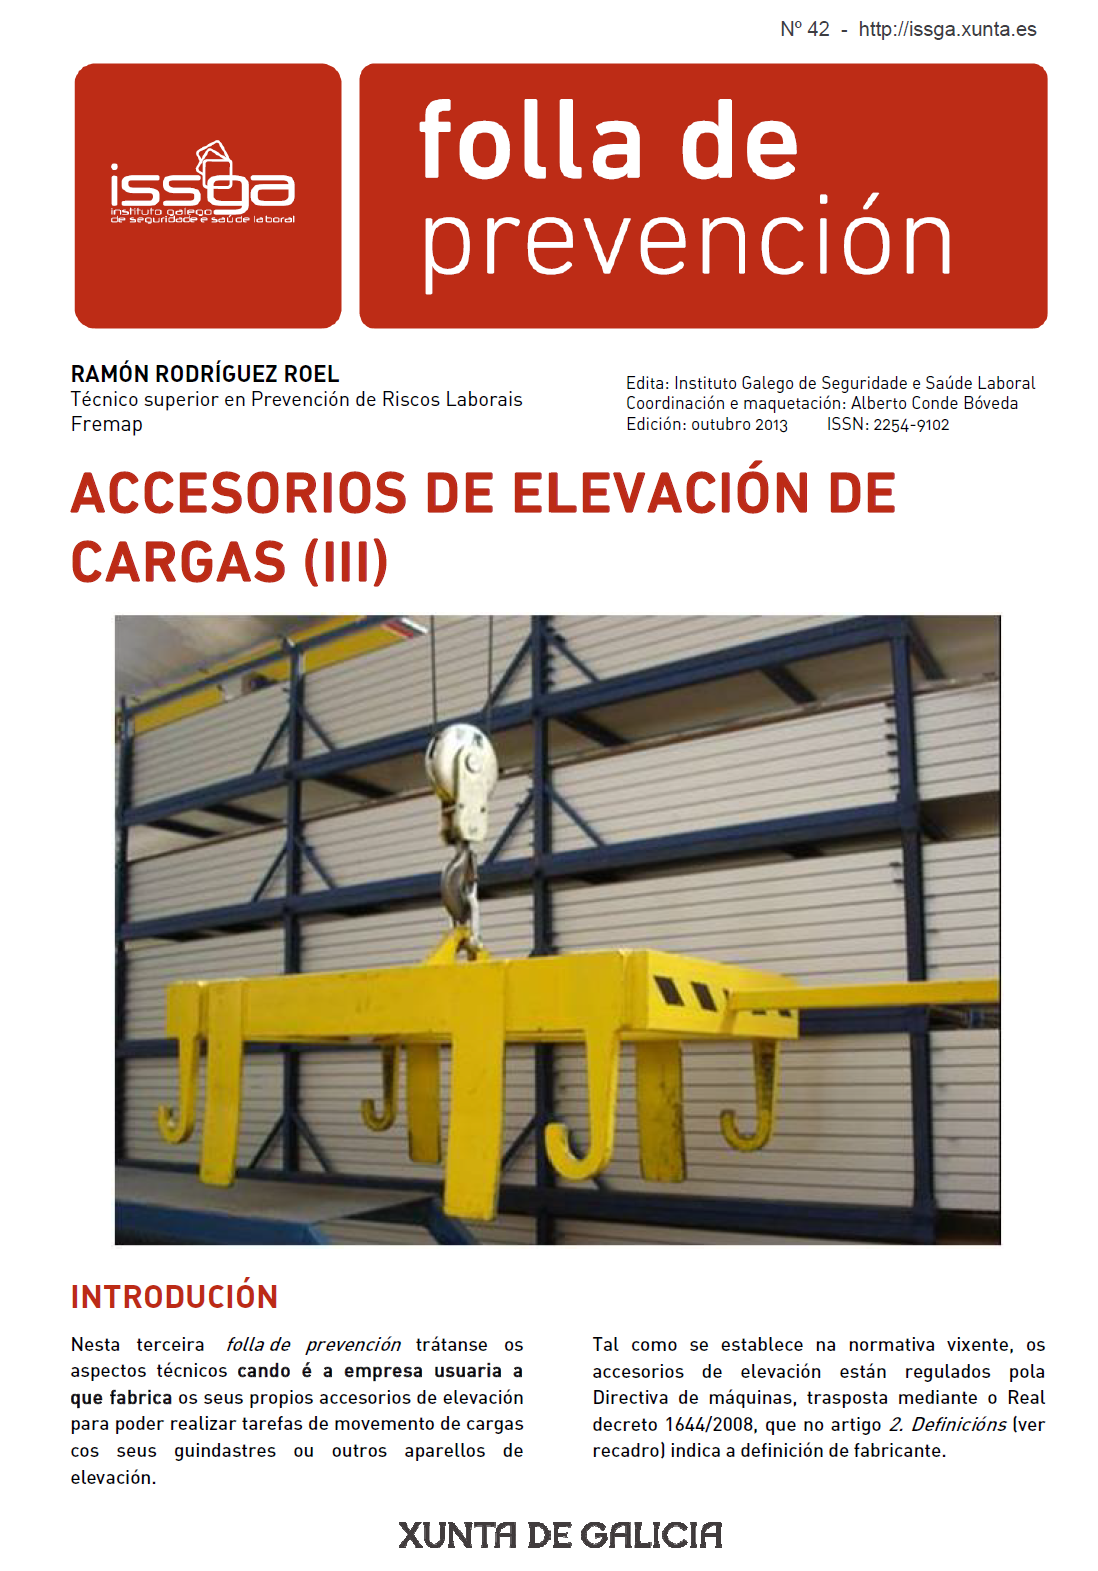 Folla de prevención nº 42 - Accesorios de elevación de cargas (III)